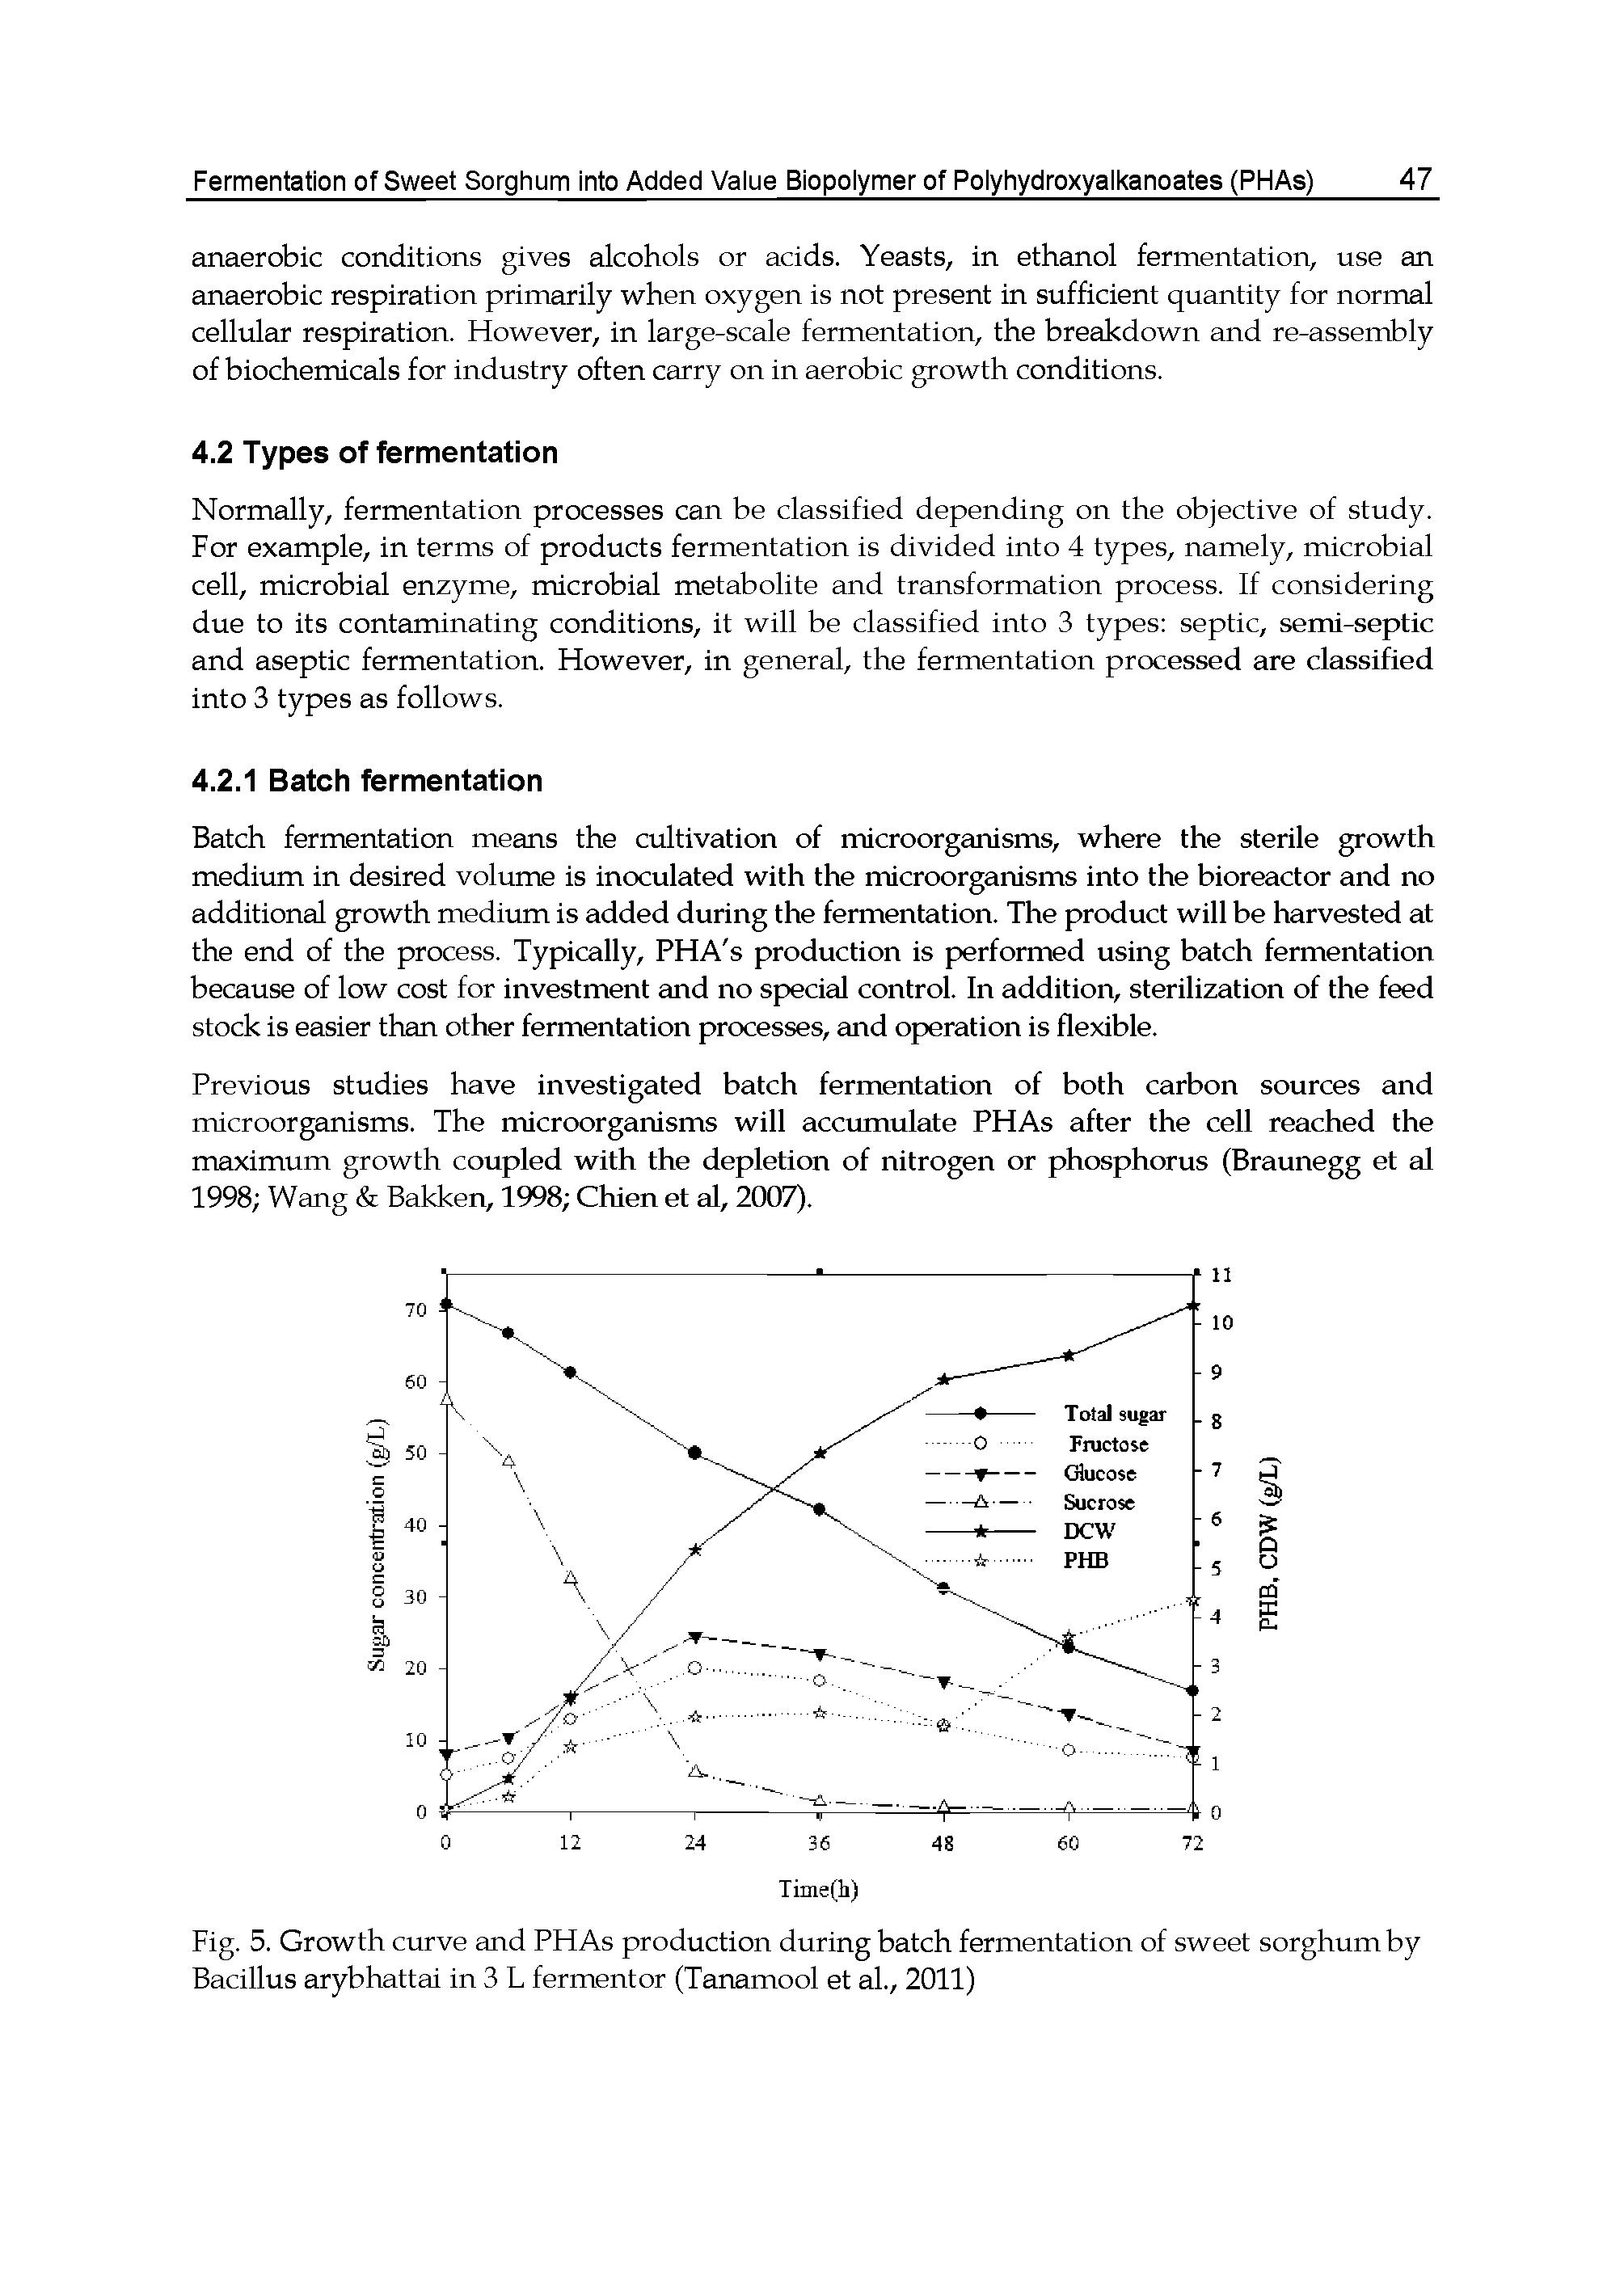 Fig. 5. Growth curve and PHAs production during batch fermentation of sweet sorghum by Bacillus arybhattai in 3 L fermentor (Tanamool et al., 2011)...